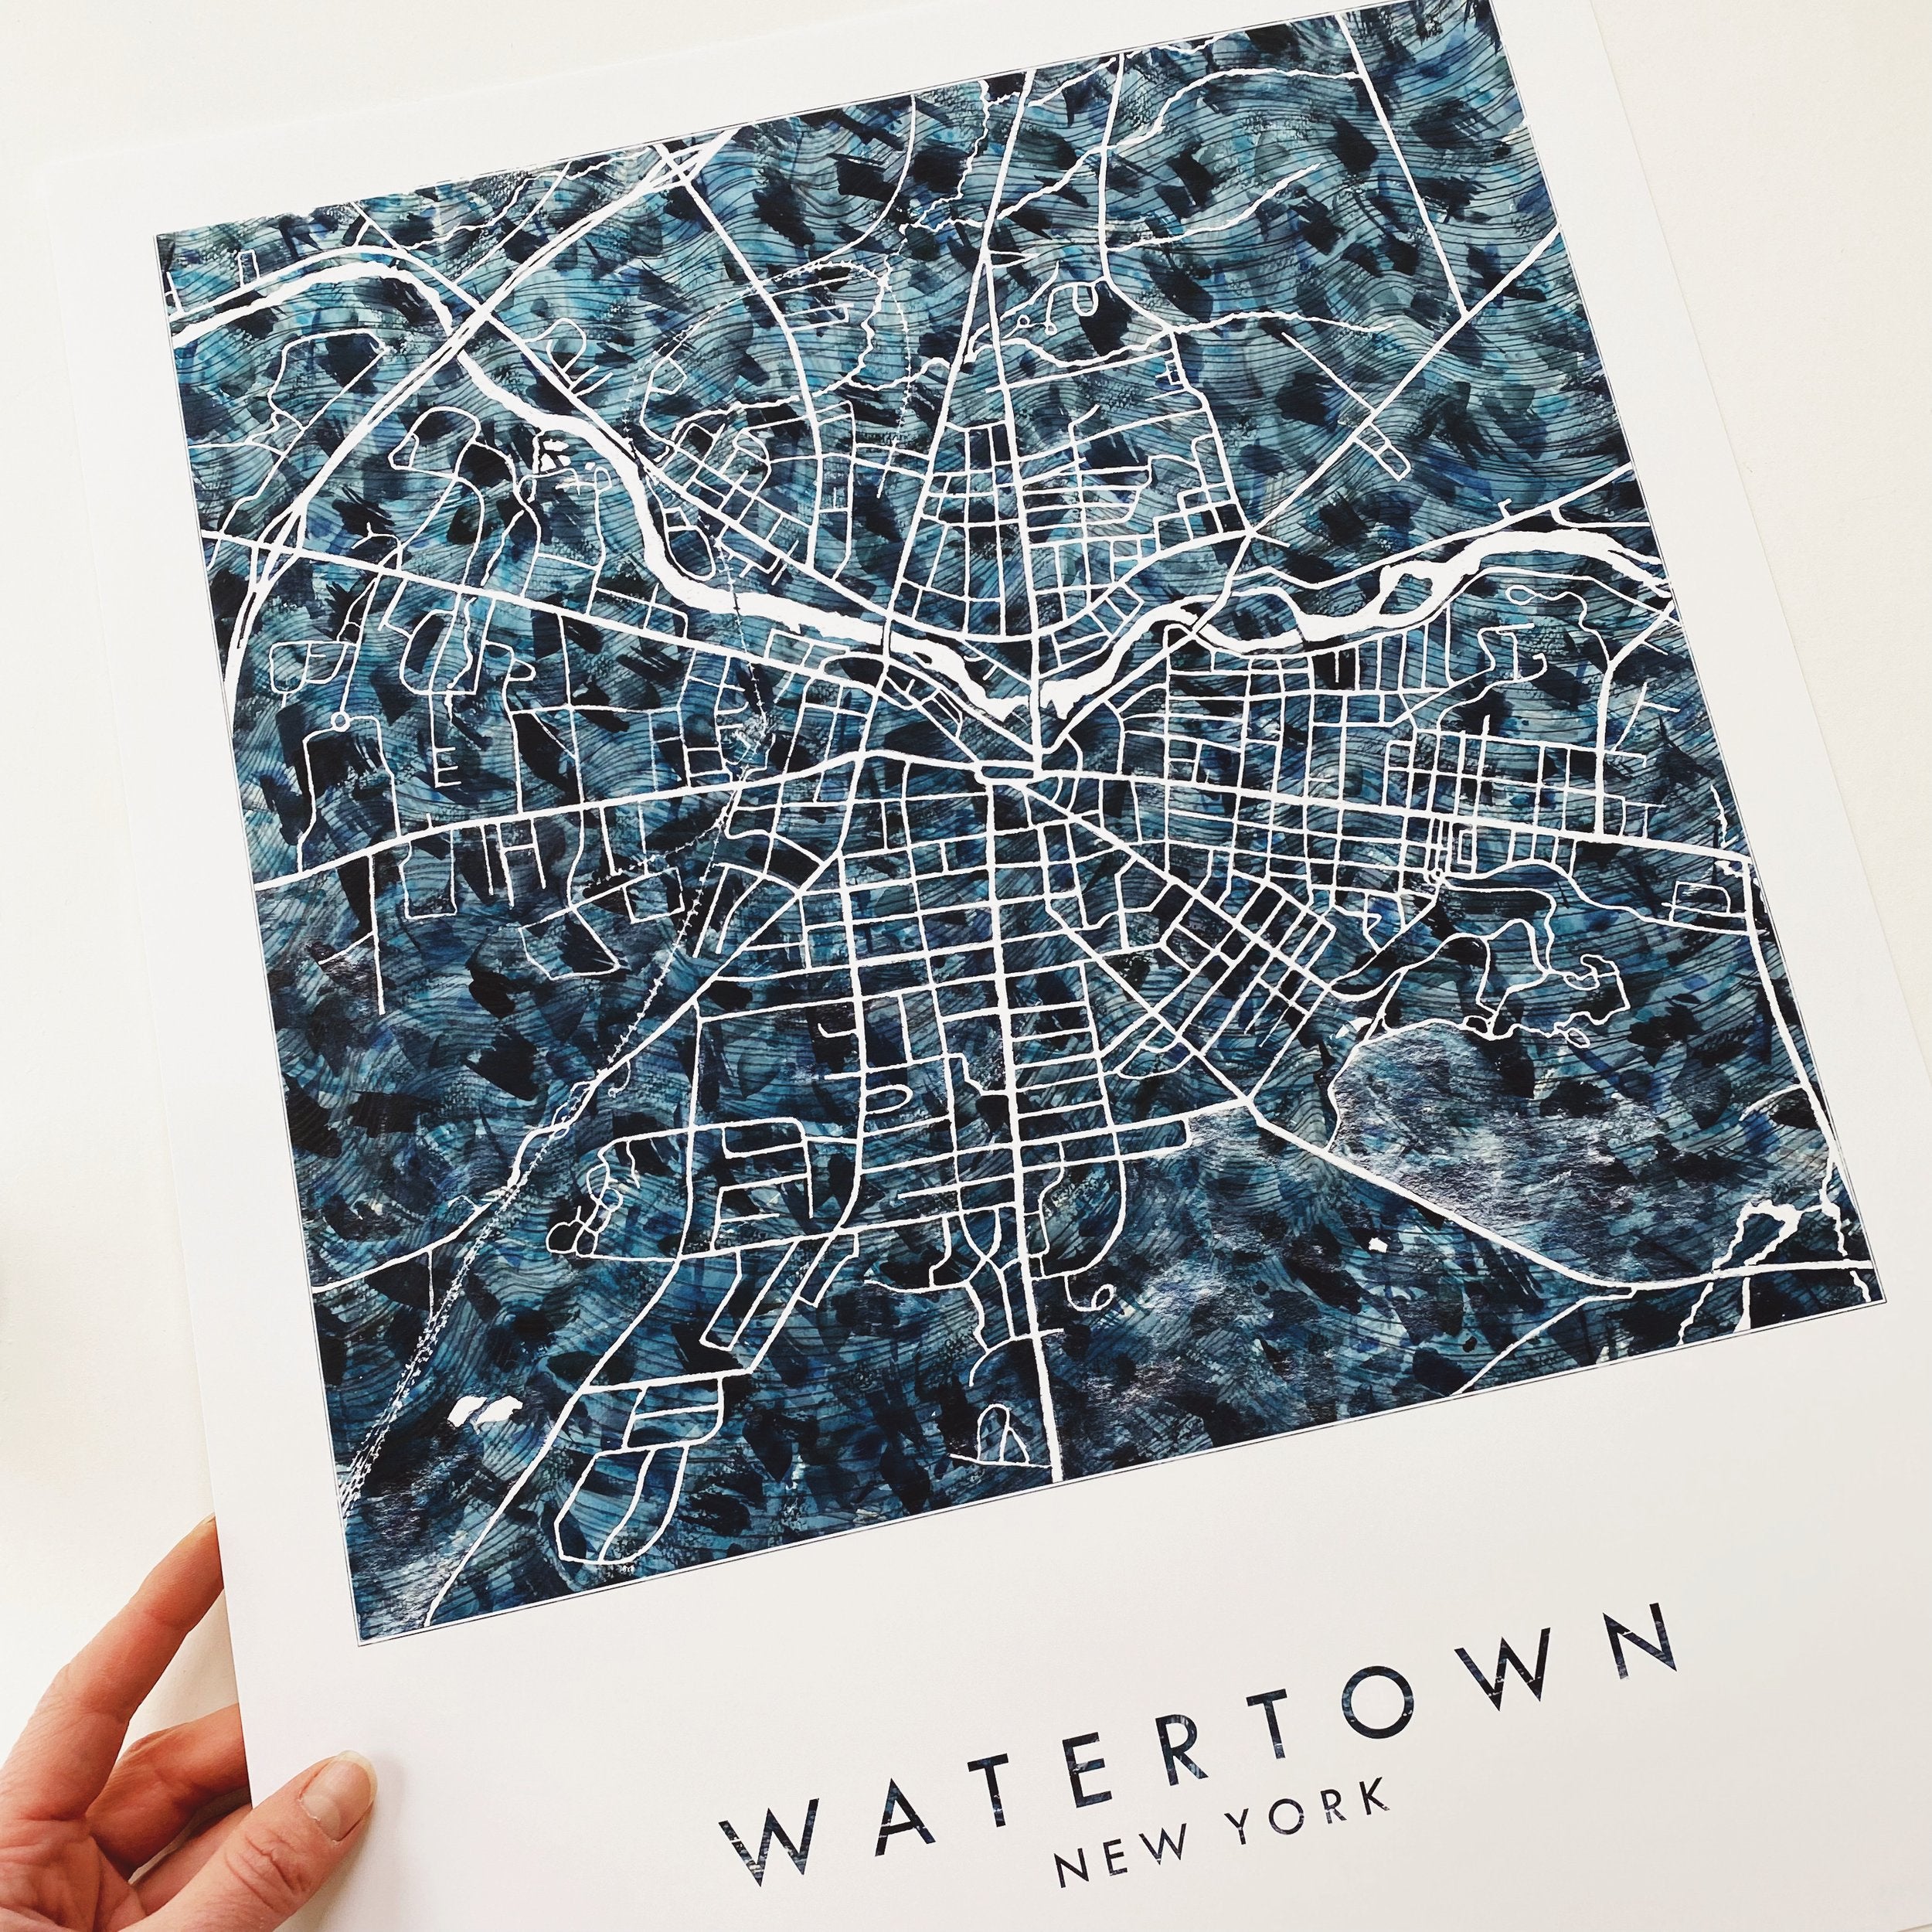 WATERTOWN NY Urban Fabrics City Map: PRINT